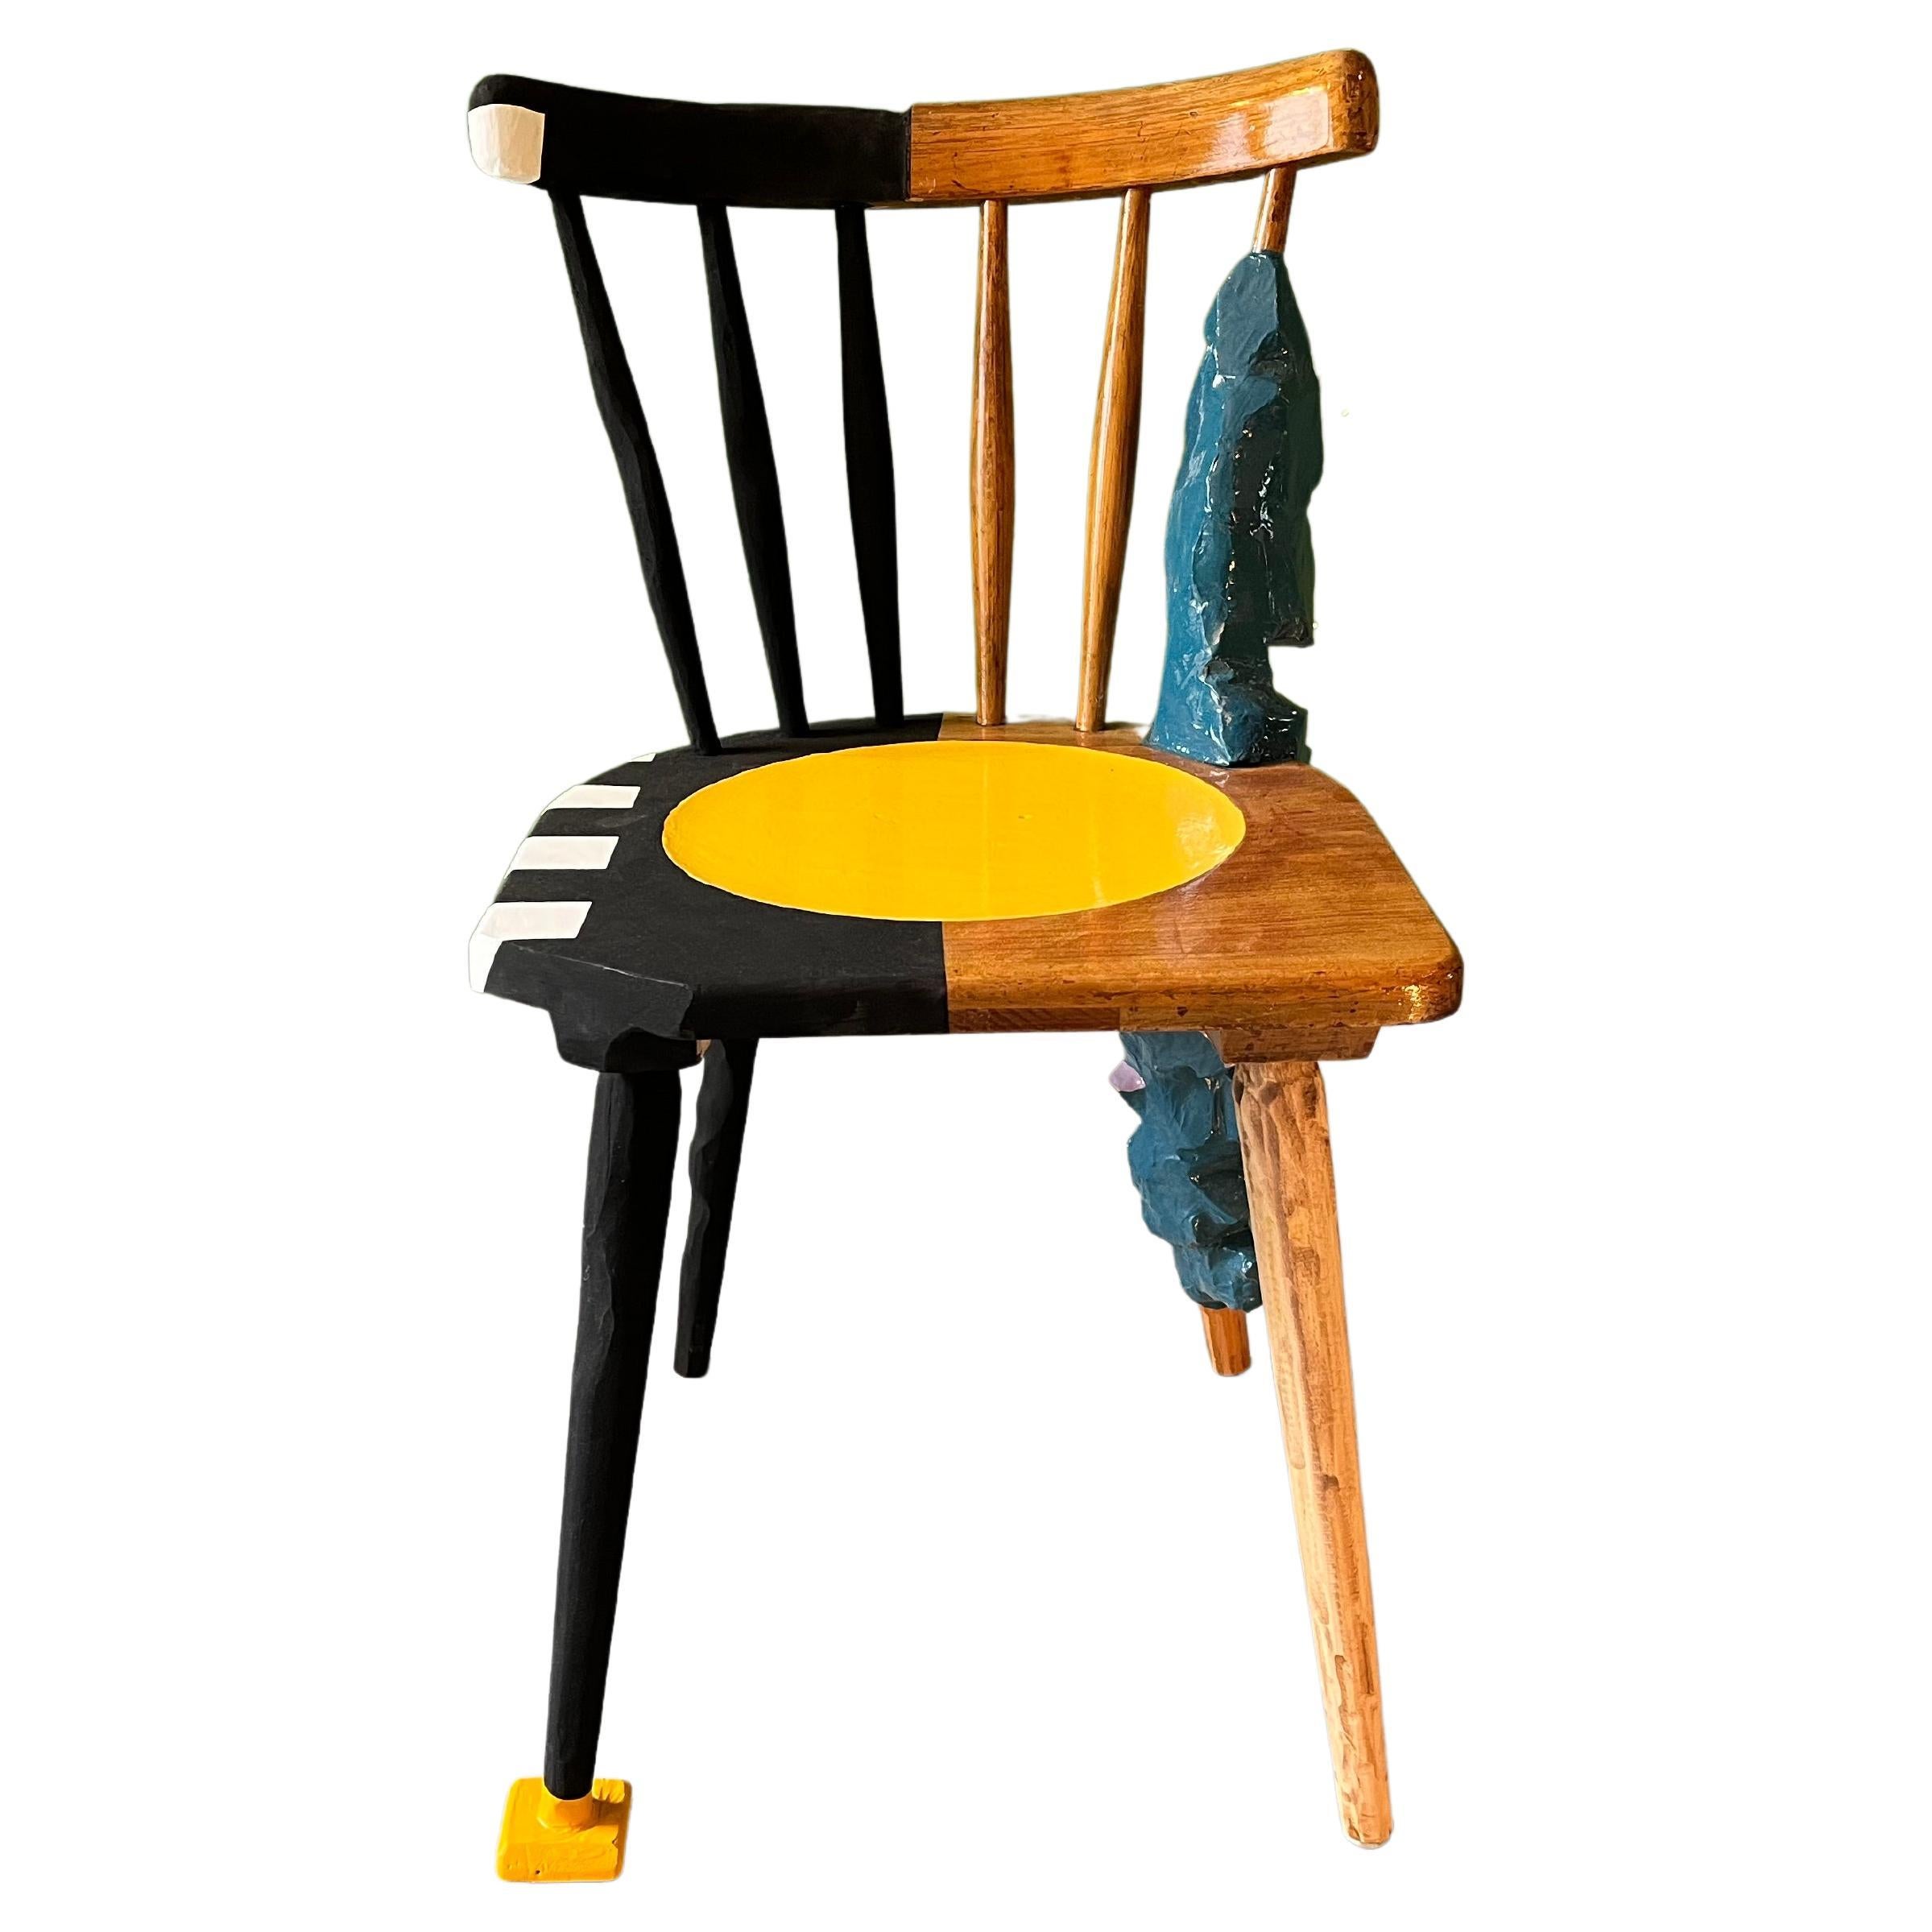 Past forges Future Chair2/ Funktionale Kunst von Markus Friedrich Staab 2022